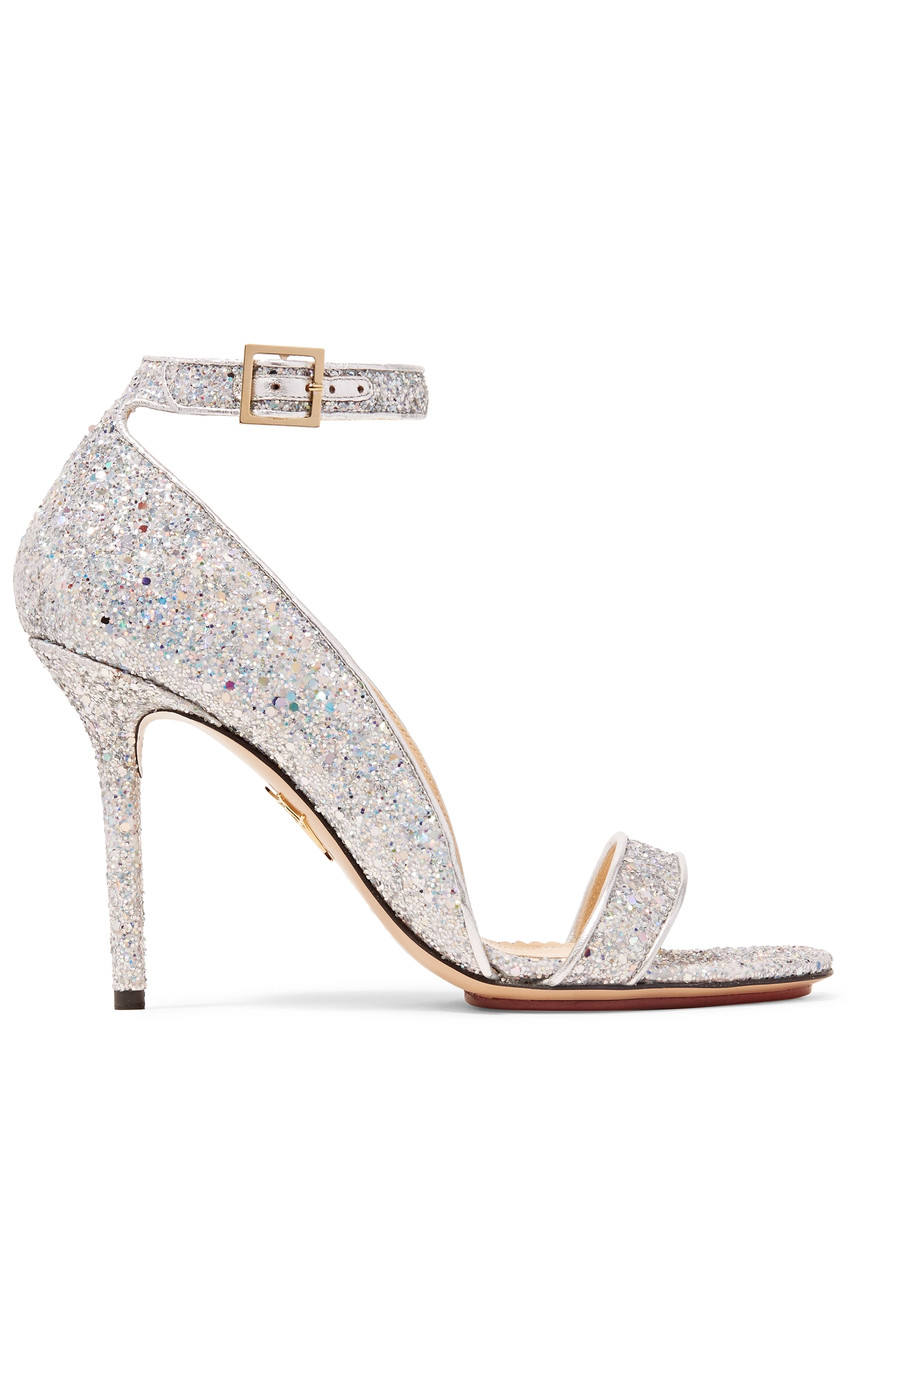 Charlotte Olympia Talitha Metallic Glittered Leather Sandals | ModeSens